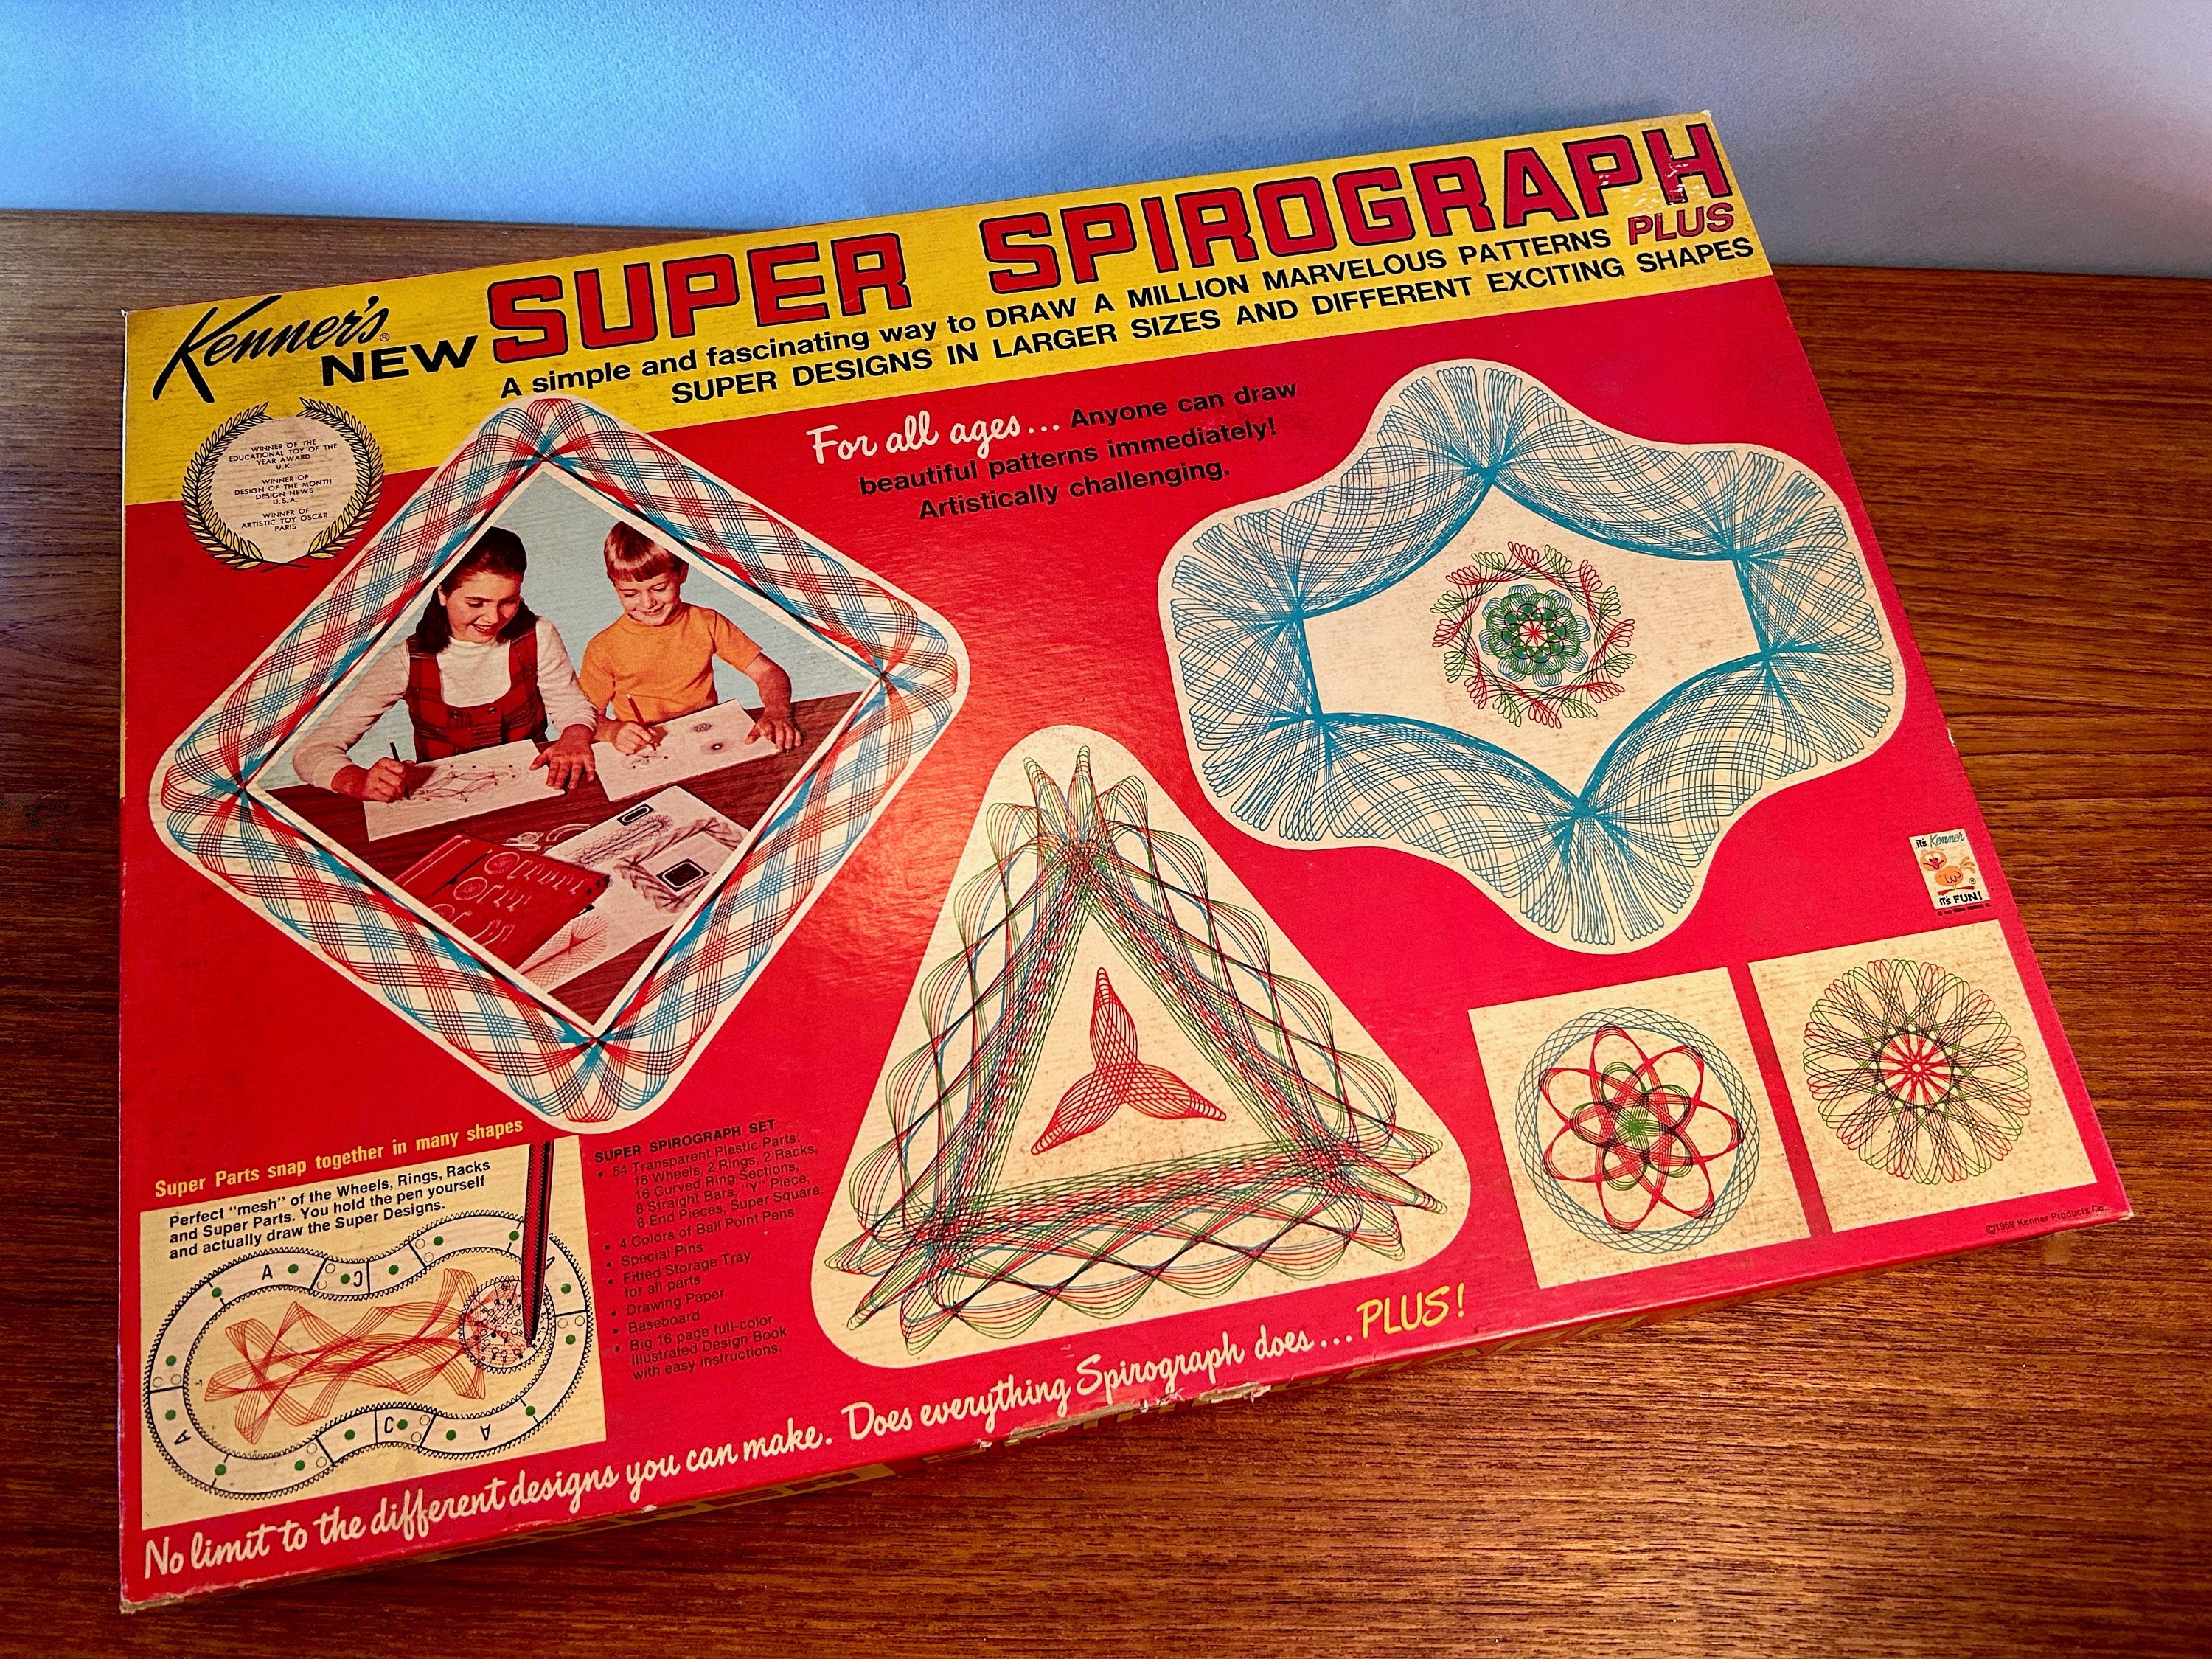 1967 vintage Kenner's New SPIROGRAPH original Box missing 3